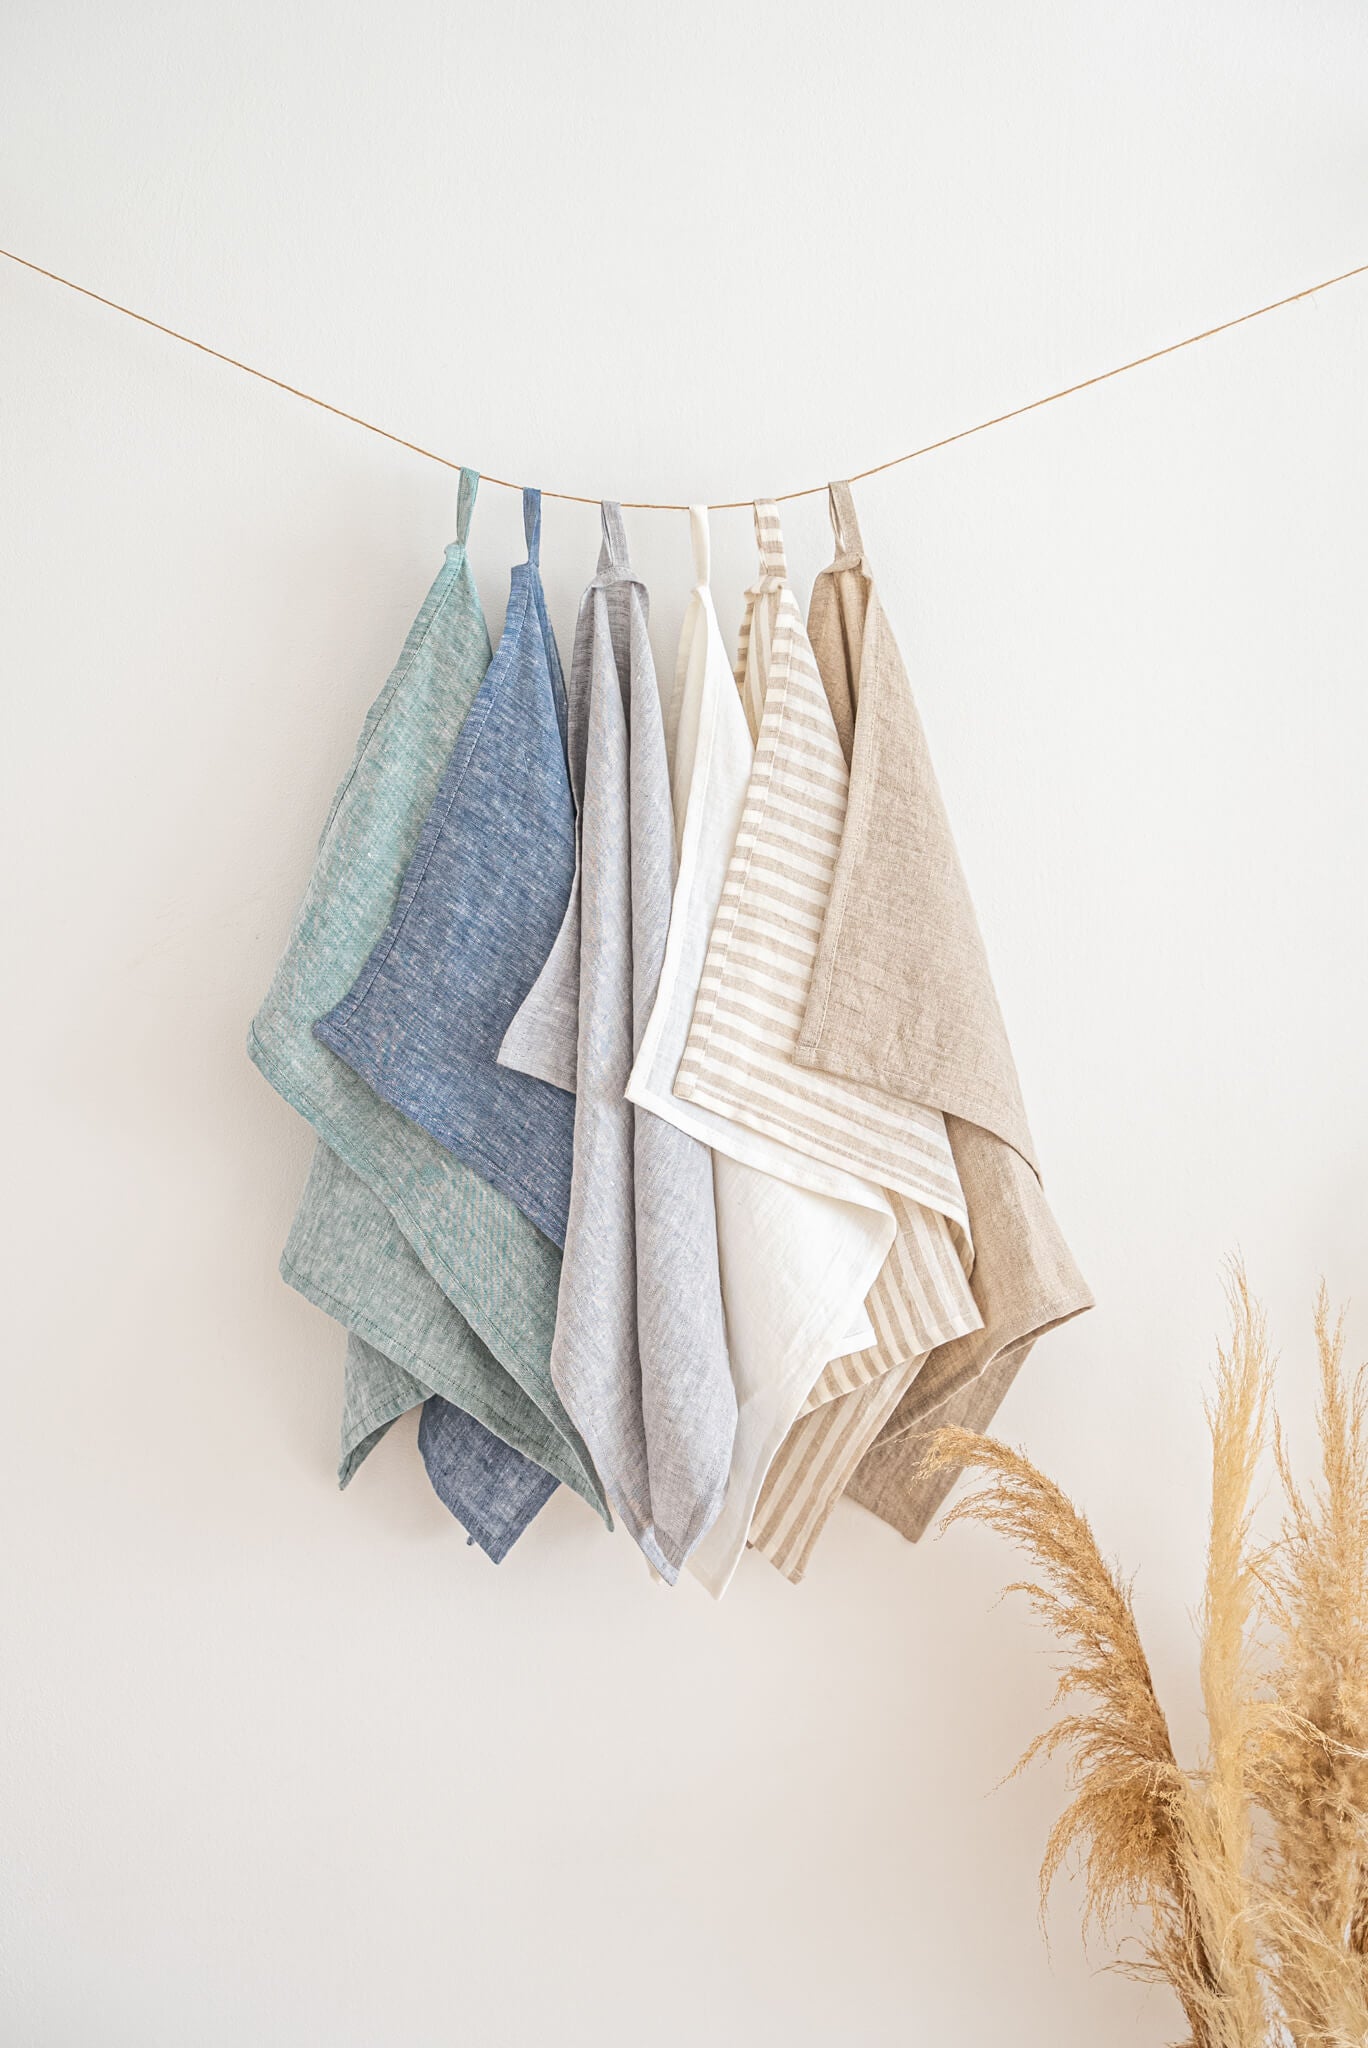 Linen tea towels set of 2 in Off White color – Easy Linen Crafts